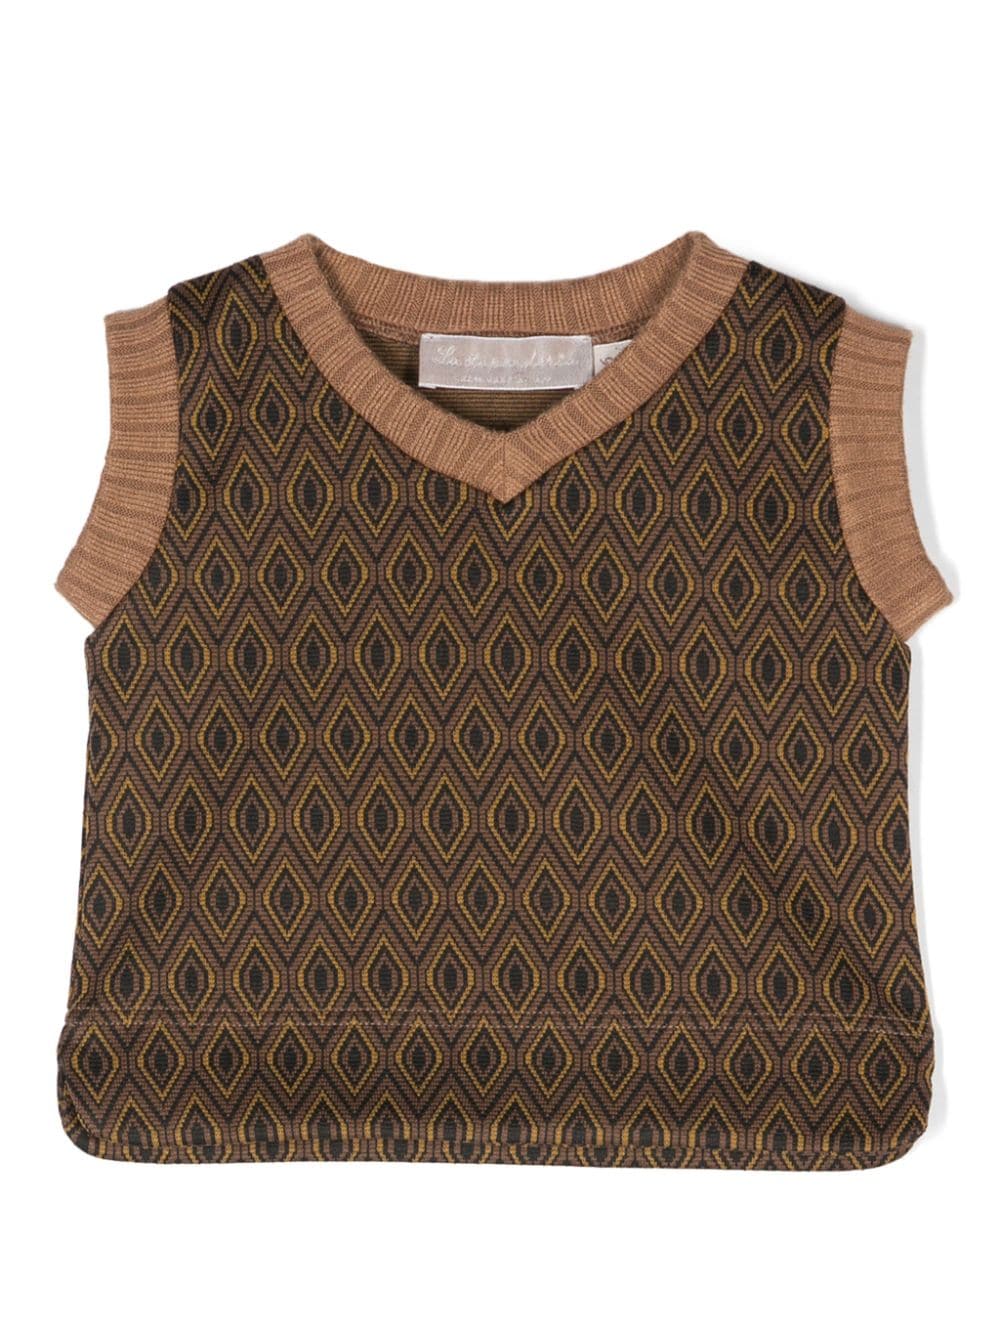 Vest with geometric pattern